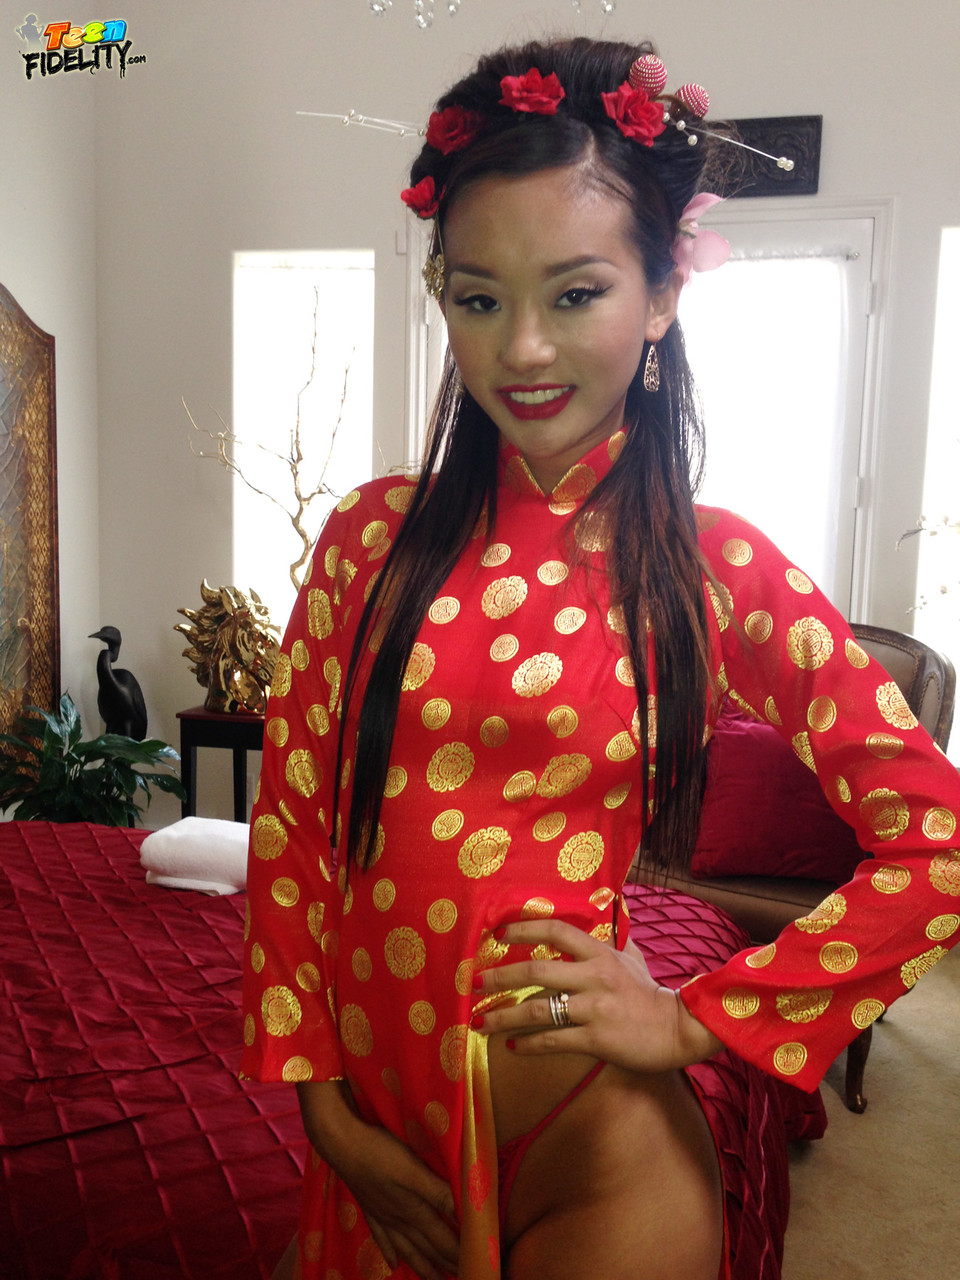 Skinny Asian hottie Alina Li modelling clothed & naked outdoors & in public 色情照片 #422657858 | Teen Fidelity Pics, Alina Li, Ryan Madison, Asian, 手机色情